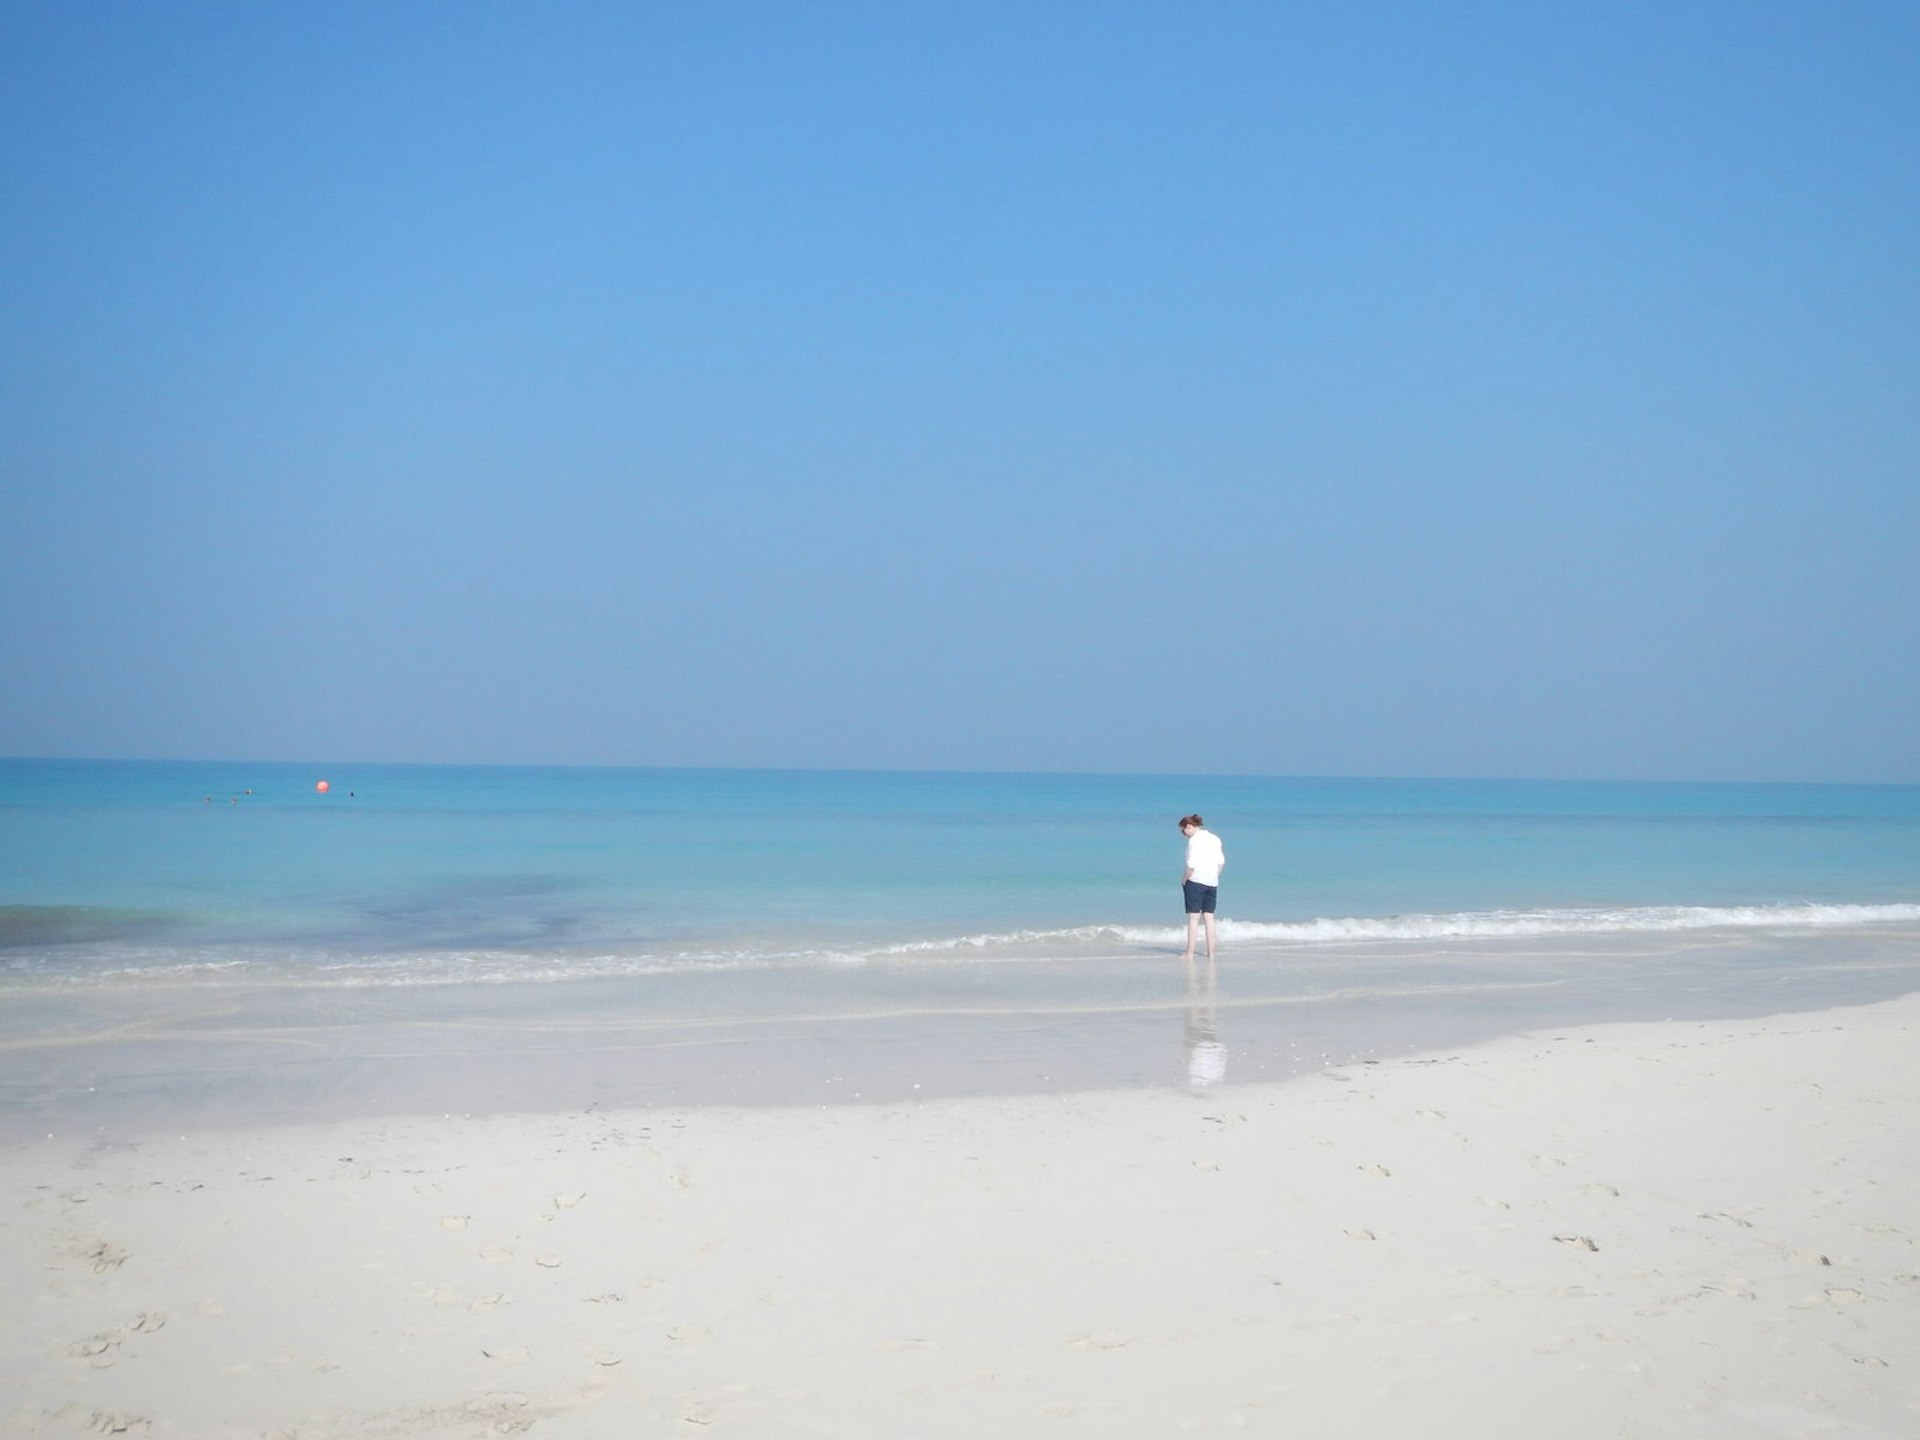 Walking along Saadiyat Beach, Abu Dhabi. Image by Lindsey Parry / Lonely Planet